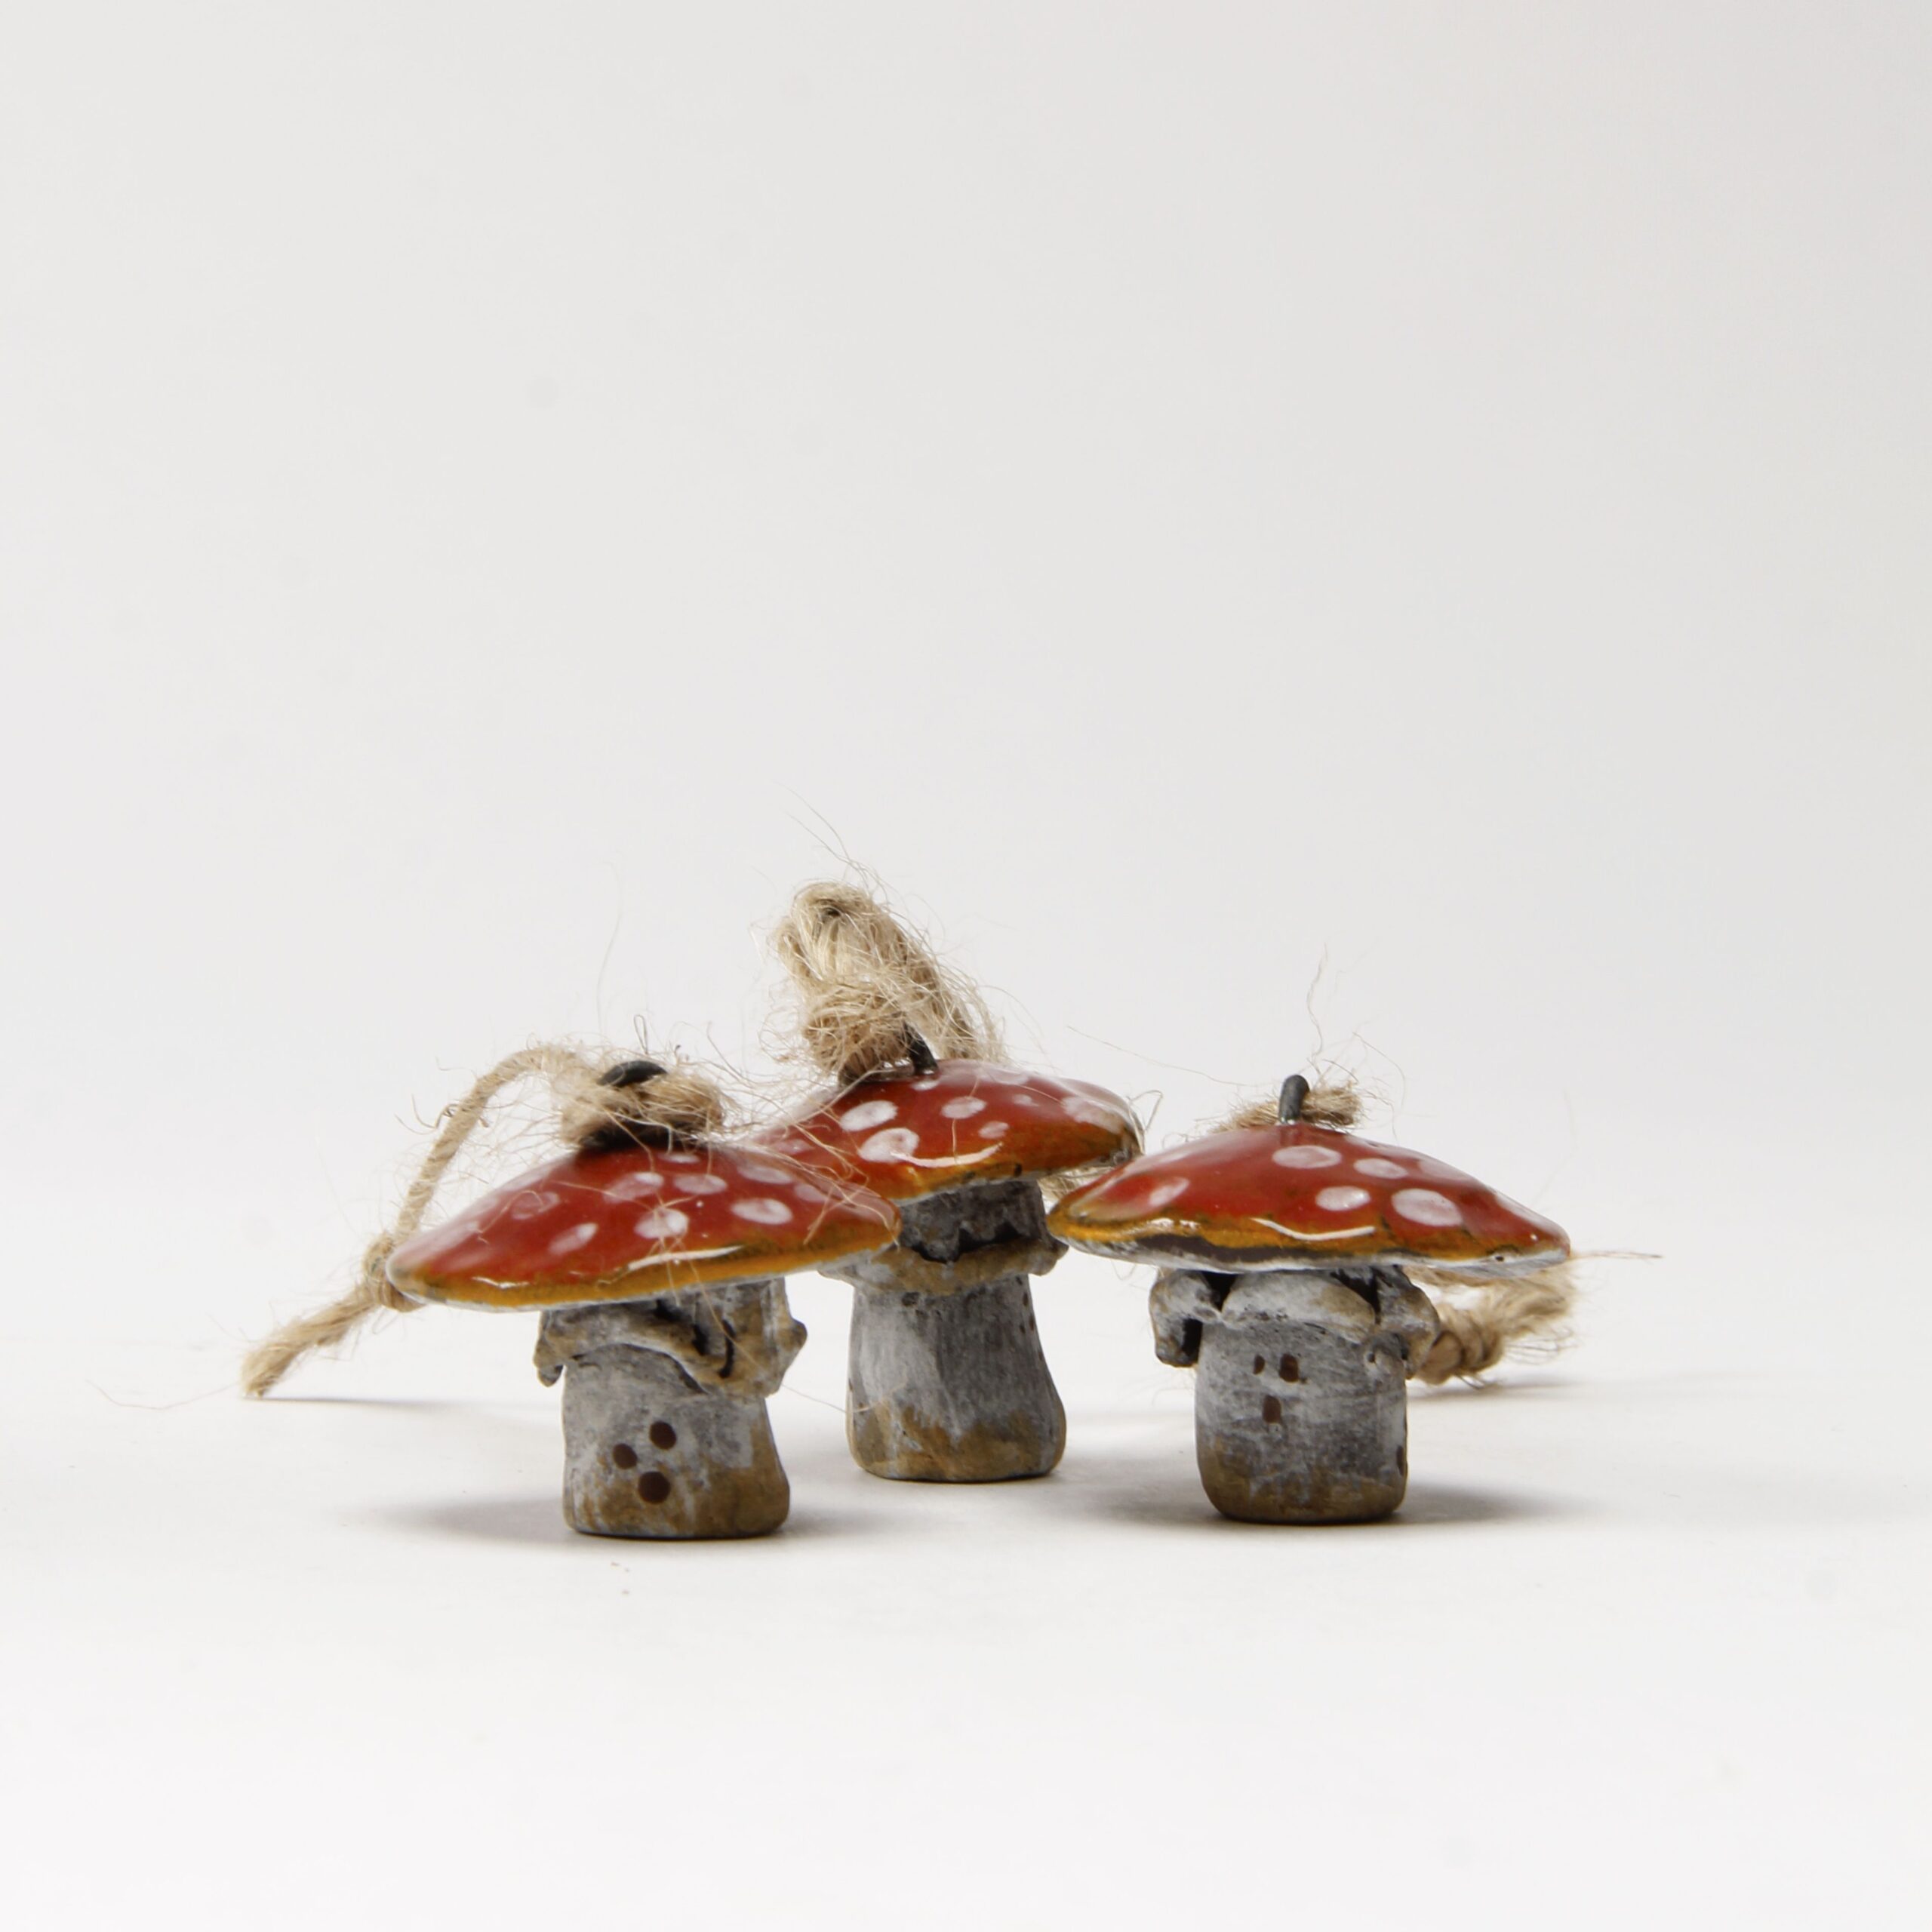 Kerri Jerome: Mushroom Ornaments Product Image 1 of 3